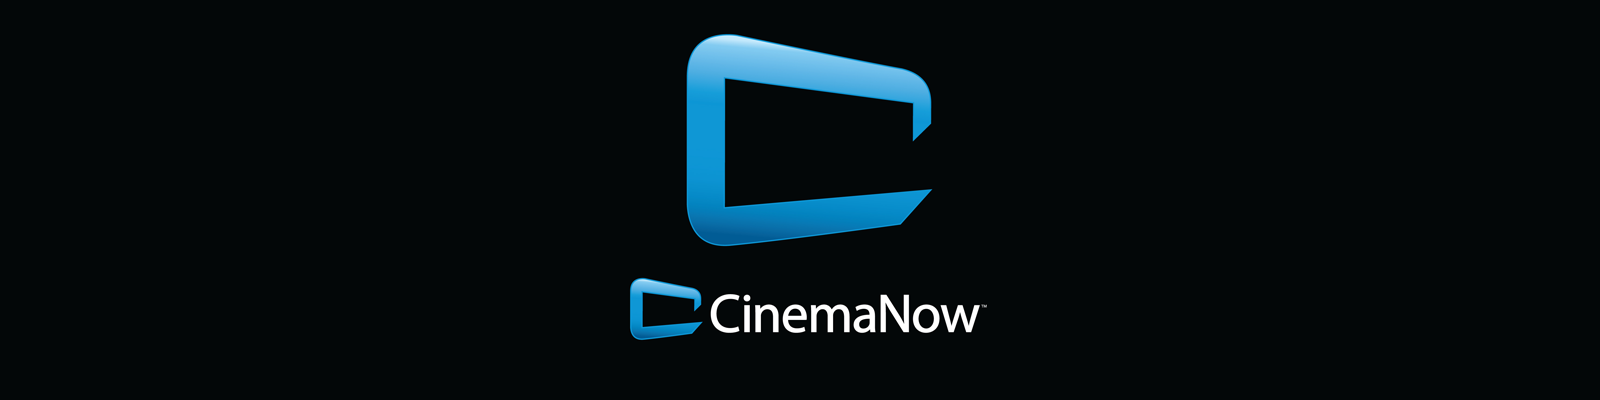 app and website like cinema now